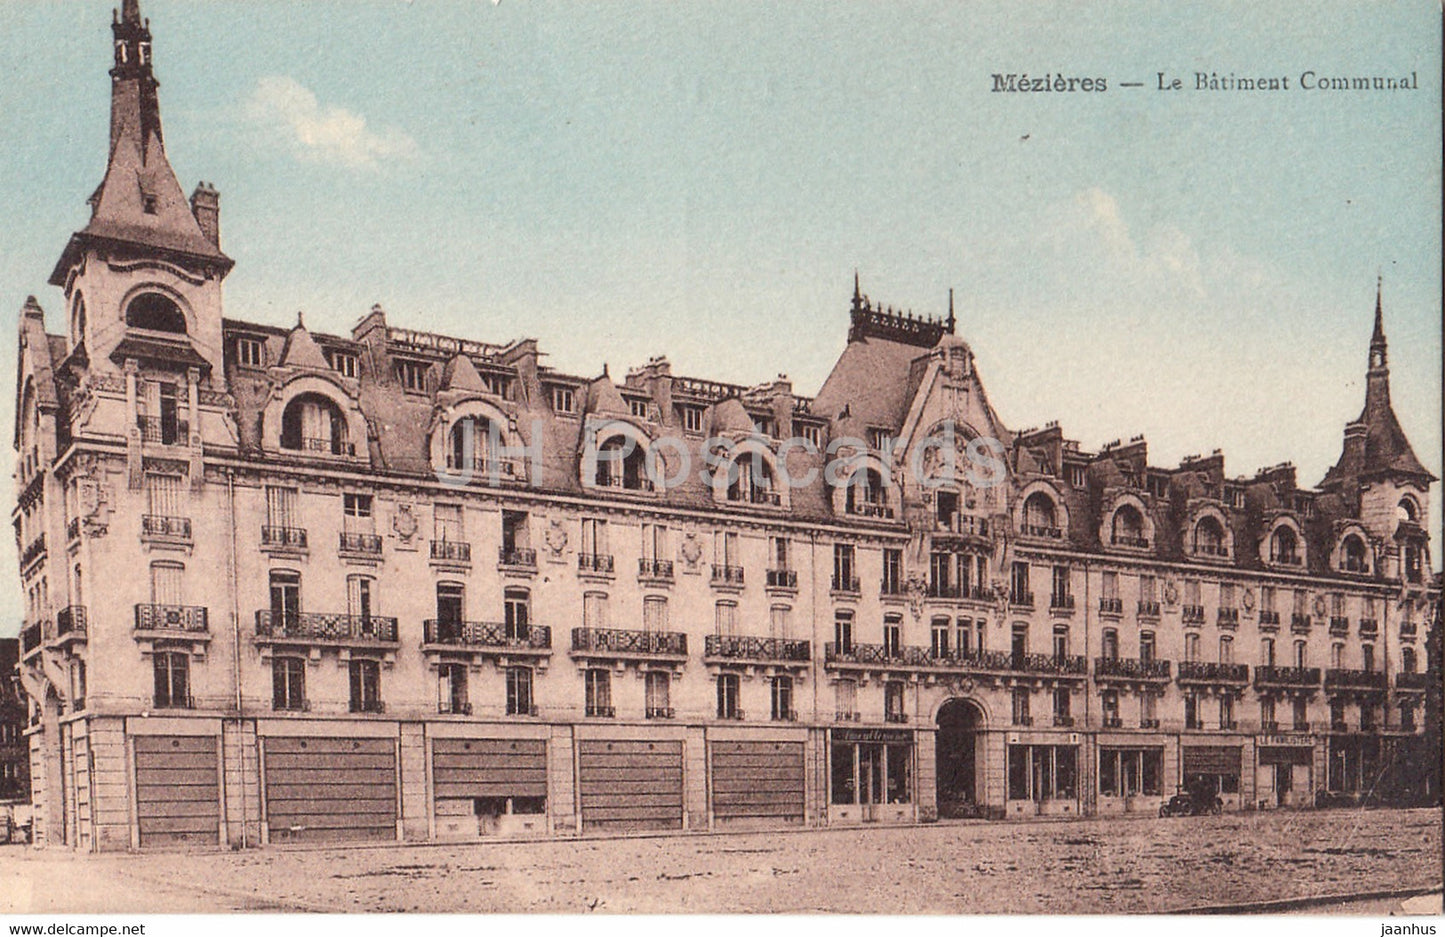 Mezieres - Le Batiment Communal - old postcard - France - unused - JH Postcards